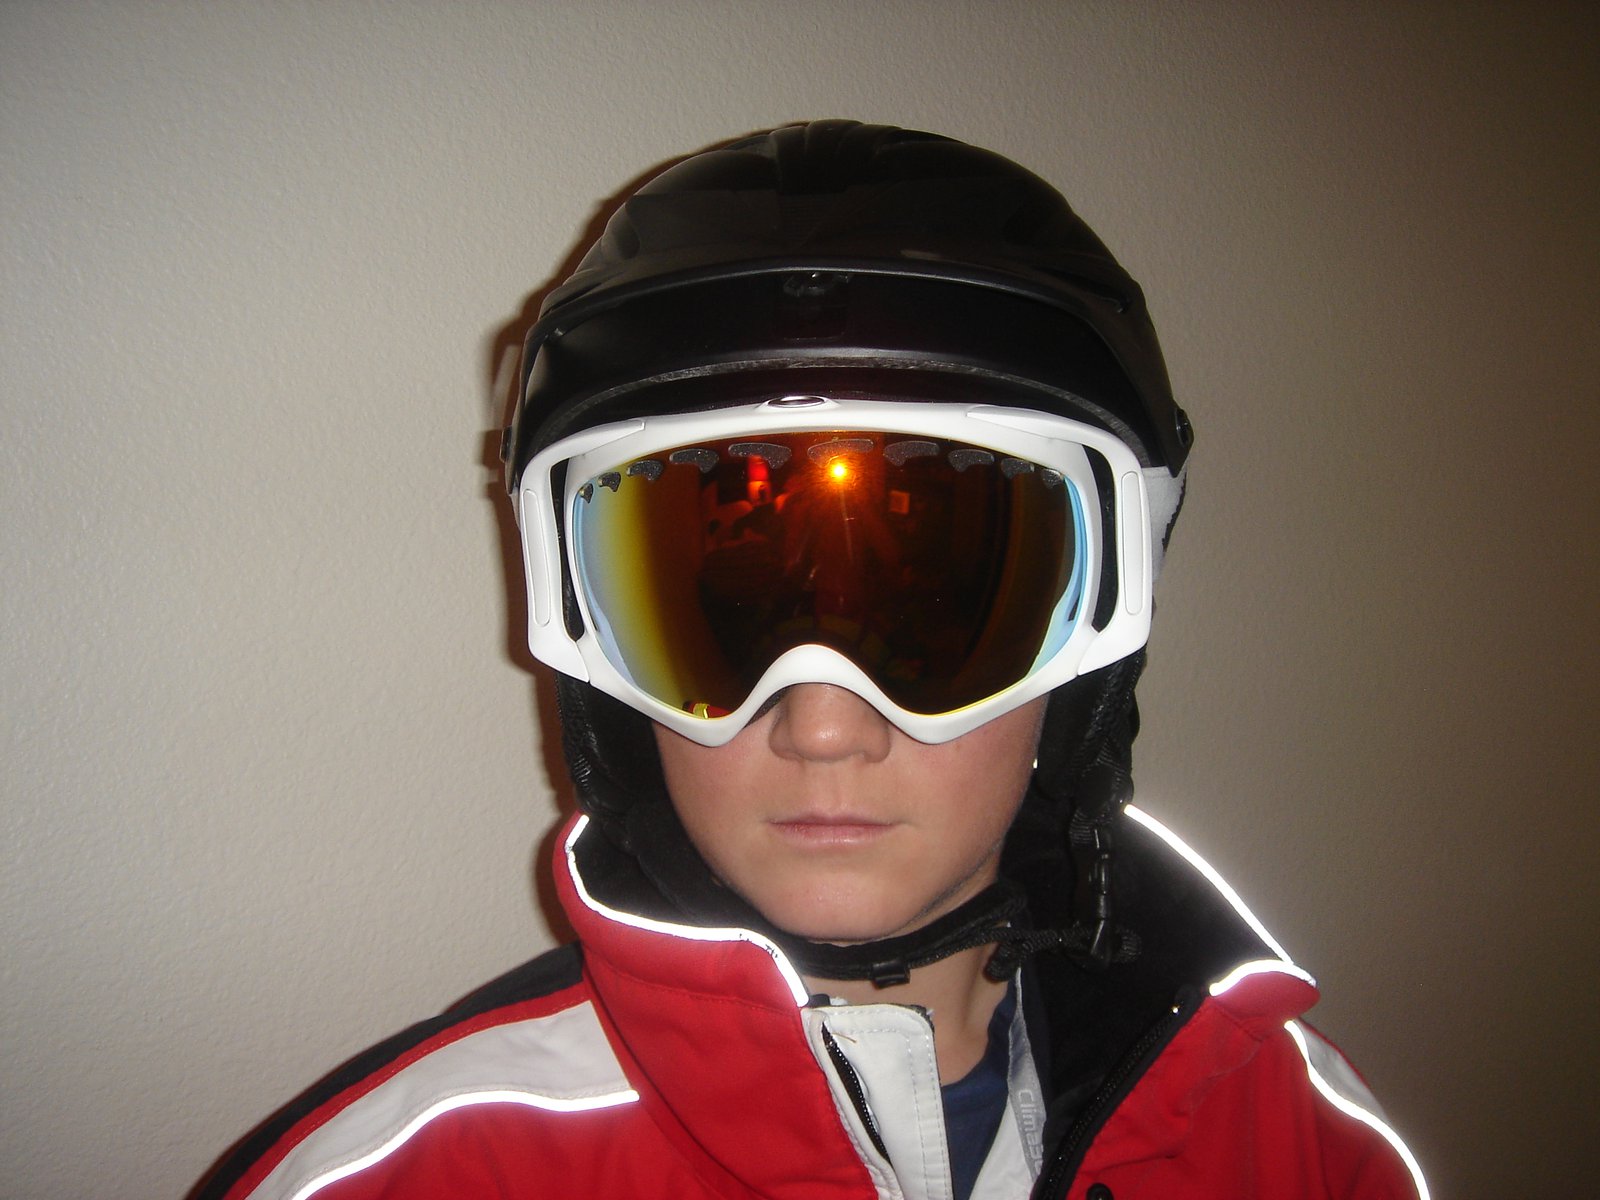 Ski Gear